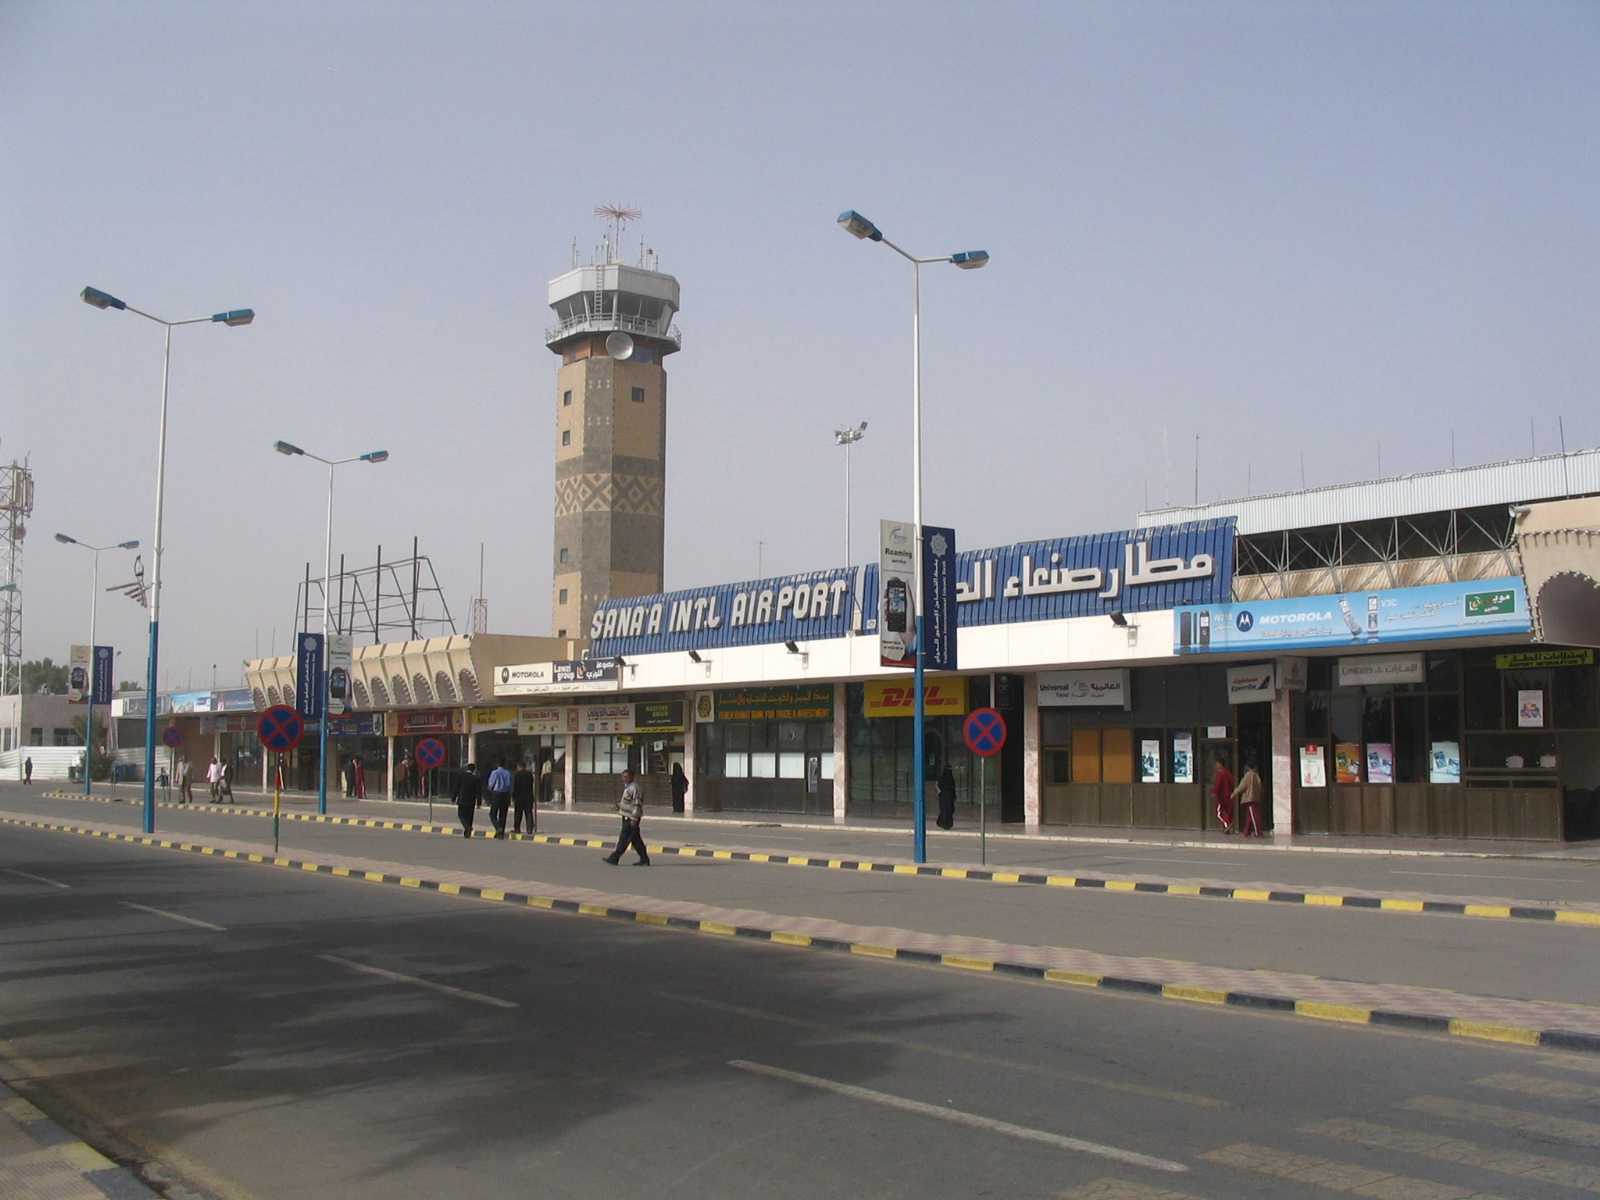 Sana'a international airport in Yemen